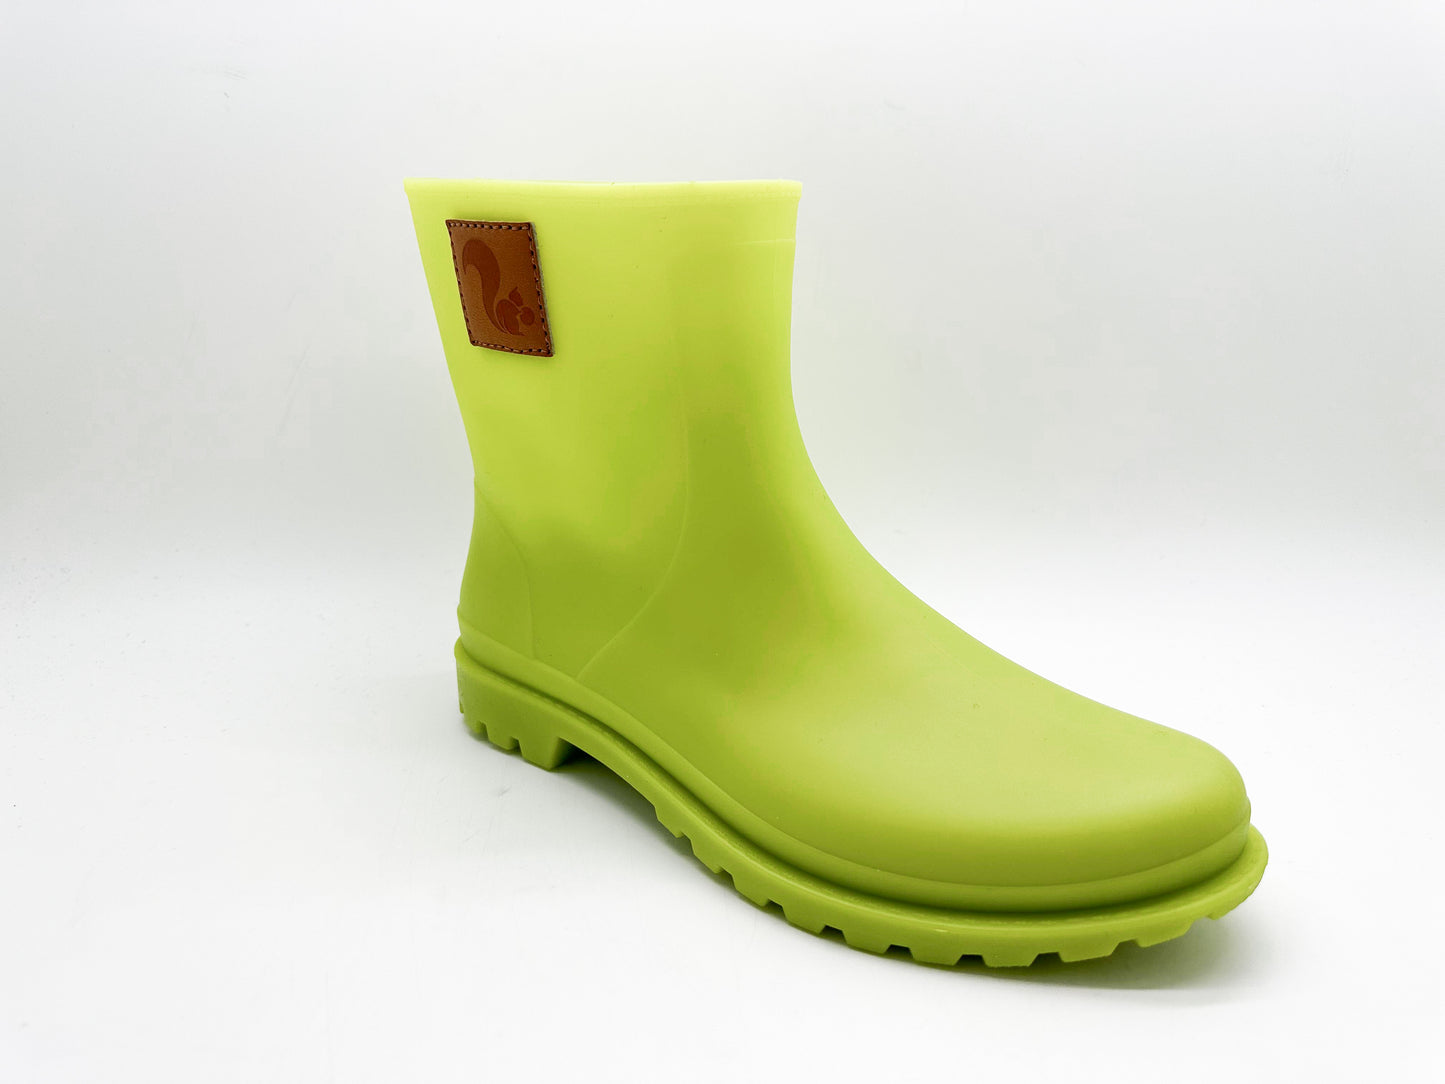 thies ® Bio Rainboot lime vegan (W) | 100% waterproof biodegradable rainboots